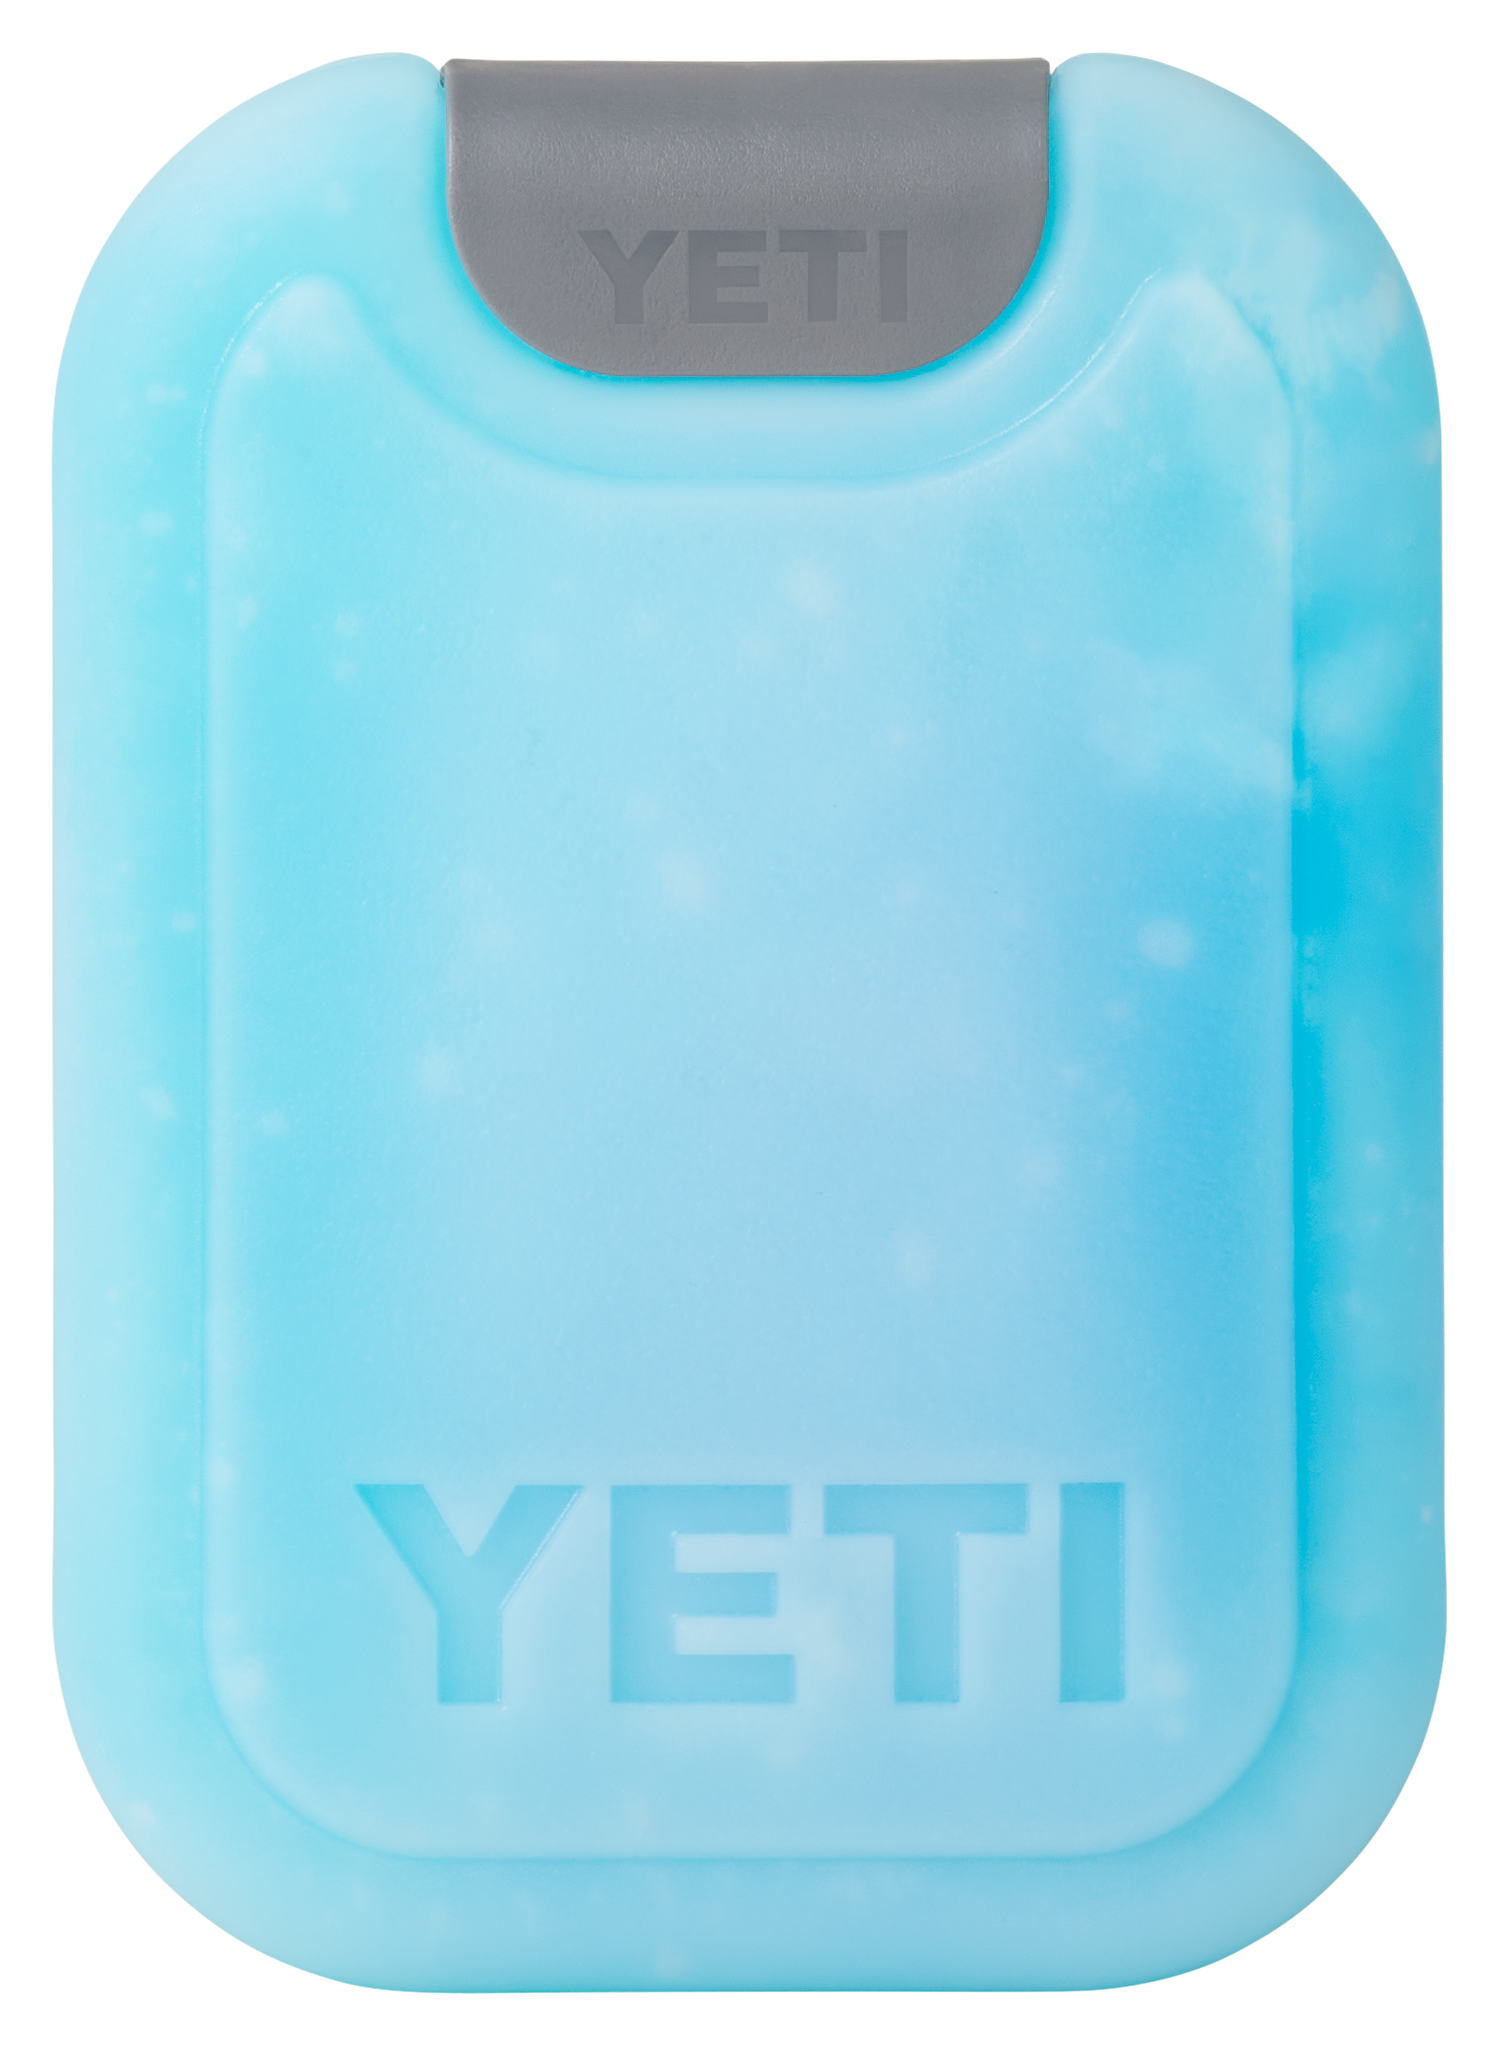 YETI Ice - Ice Substitute Cooler Accessory